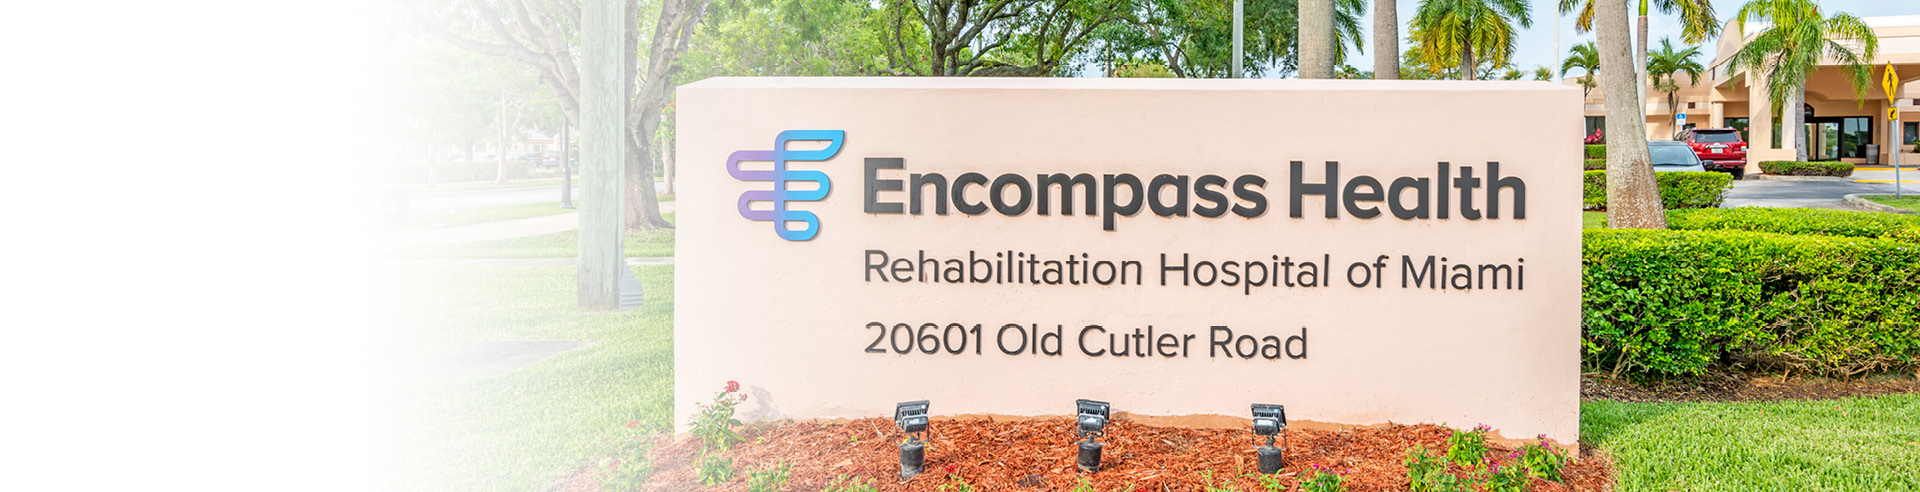 Encompass Health Rehabilitation Hospital of Miami exterior